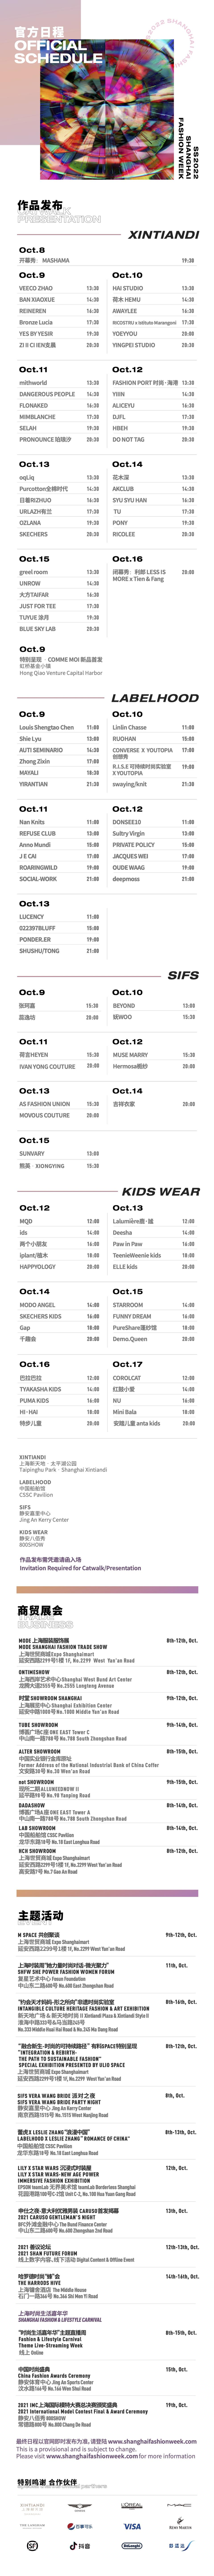 Shanghai fashion week official schedule